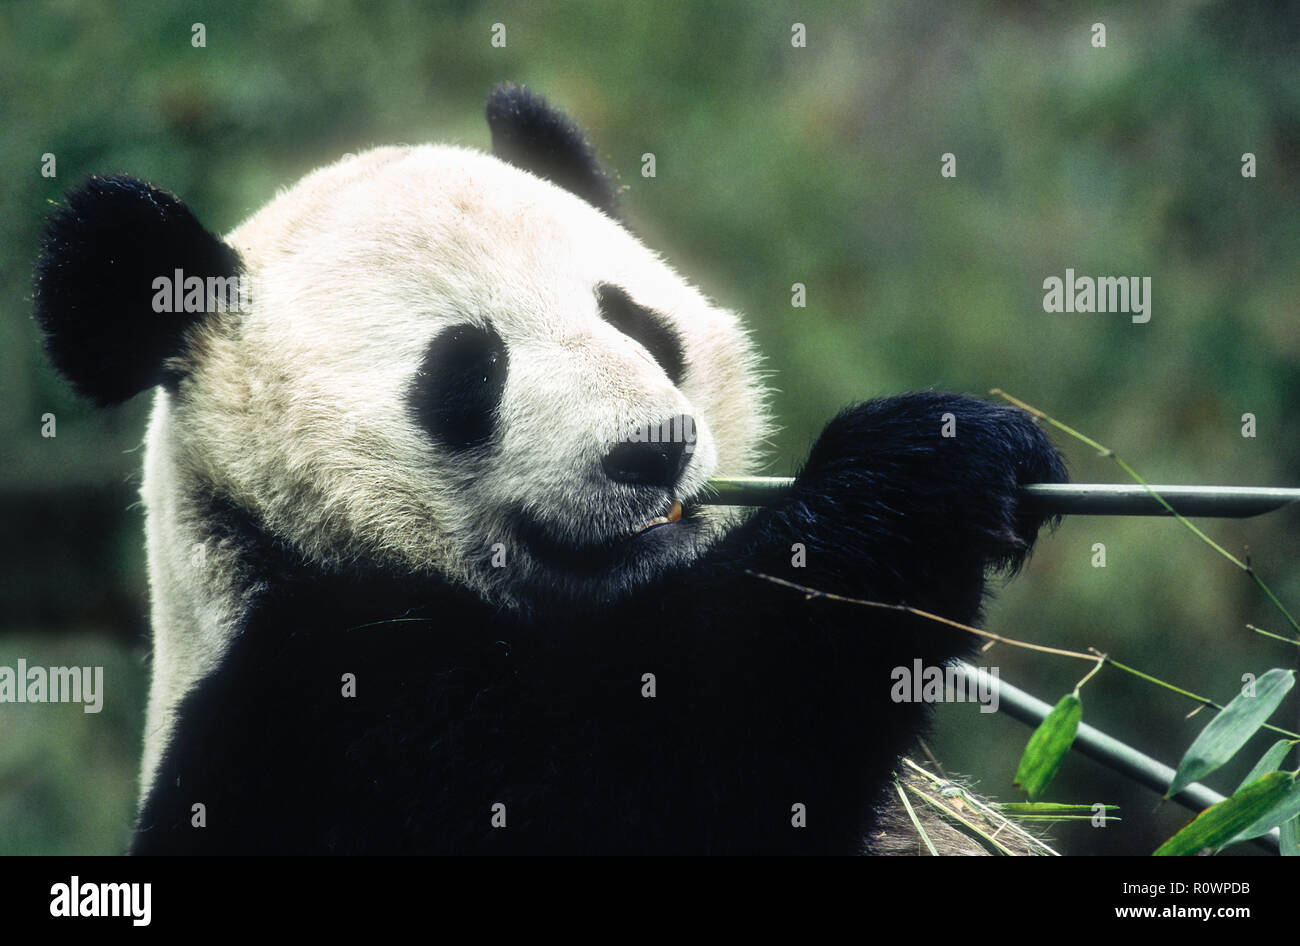 Asia; China; Wolong; Sichuan Province; Wolong China Panda Reserve; Wildlife; Mammals; Bears; Giant Panda; Endangered Species; Eating bamboo. Stock Photo